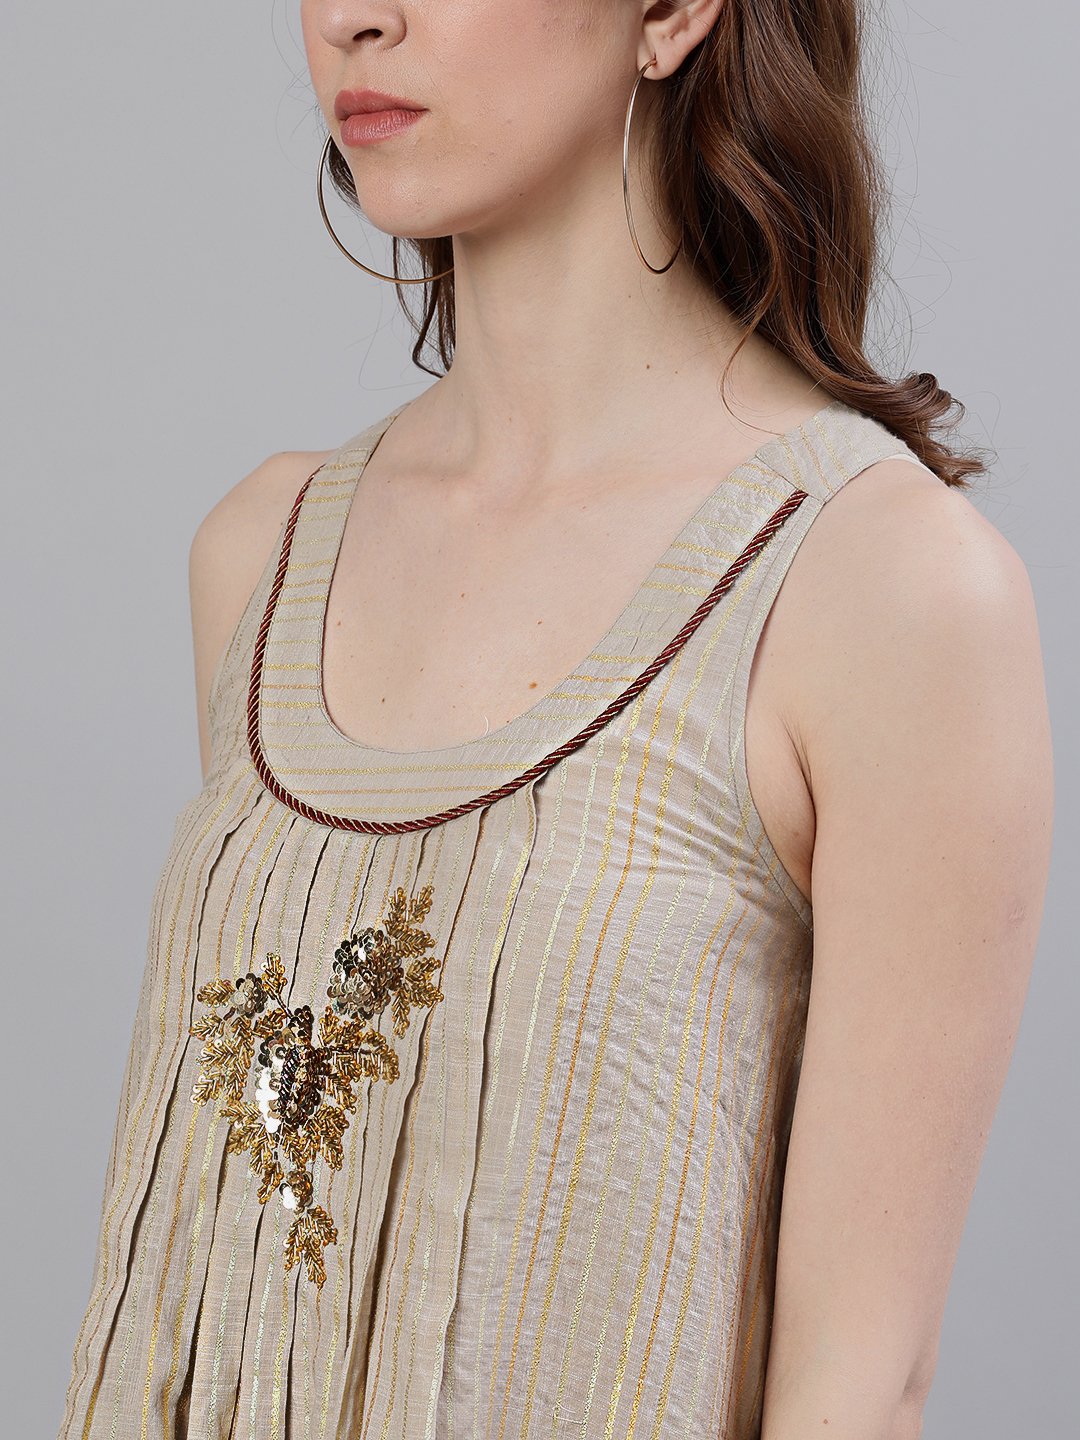 Ishin Women's Cotton Beige Lurex Embellished Style Back Top